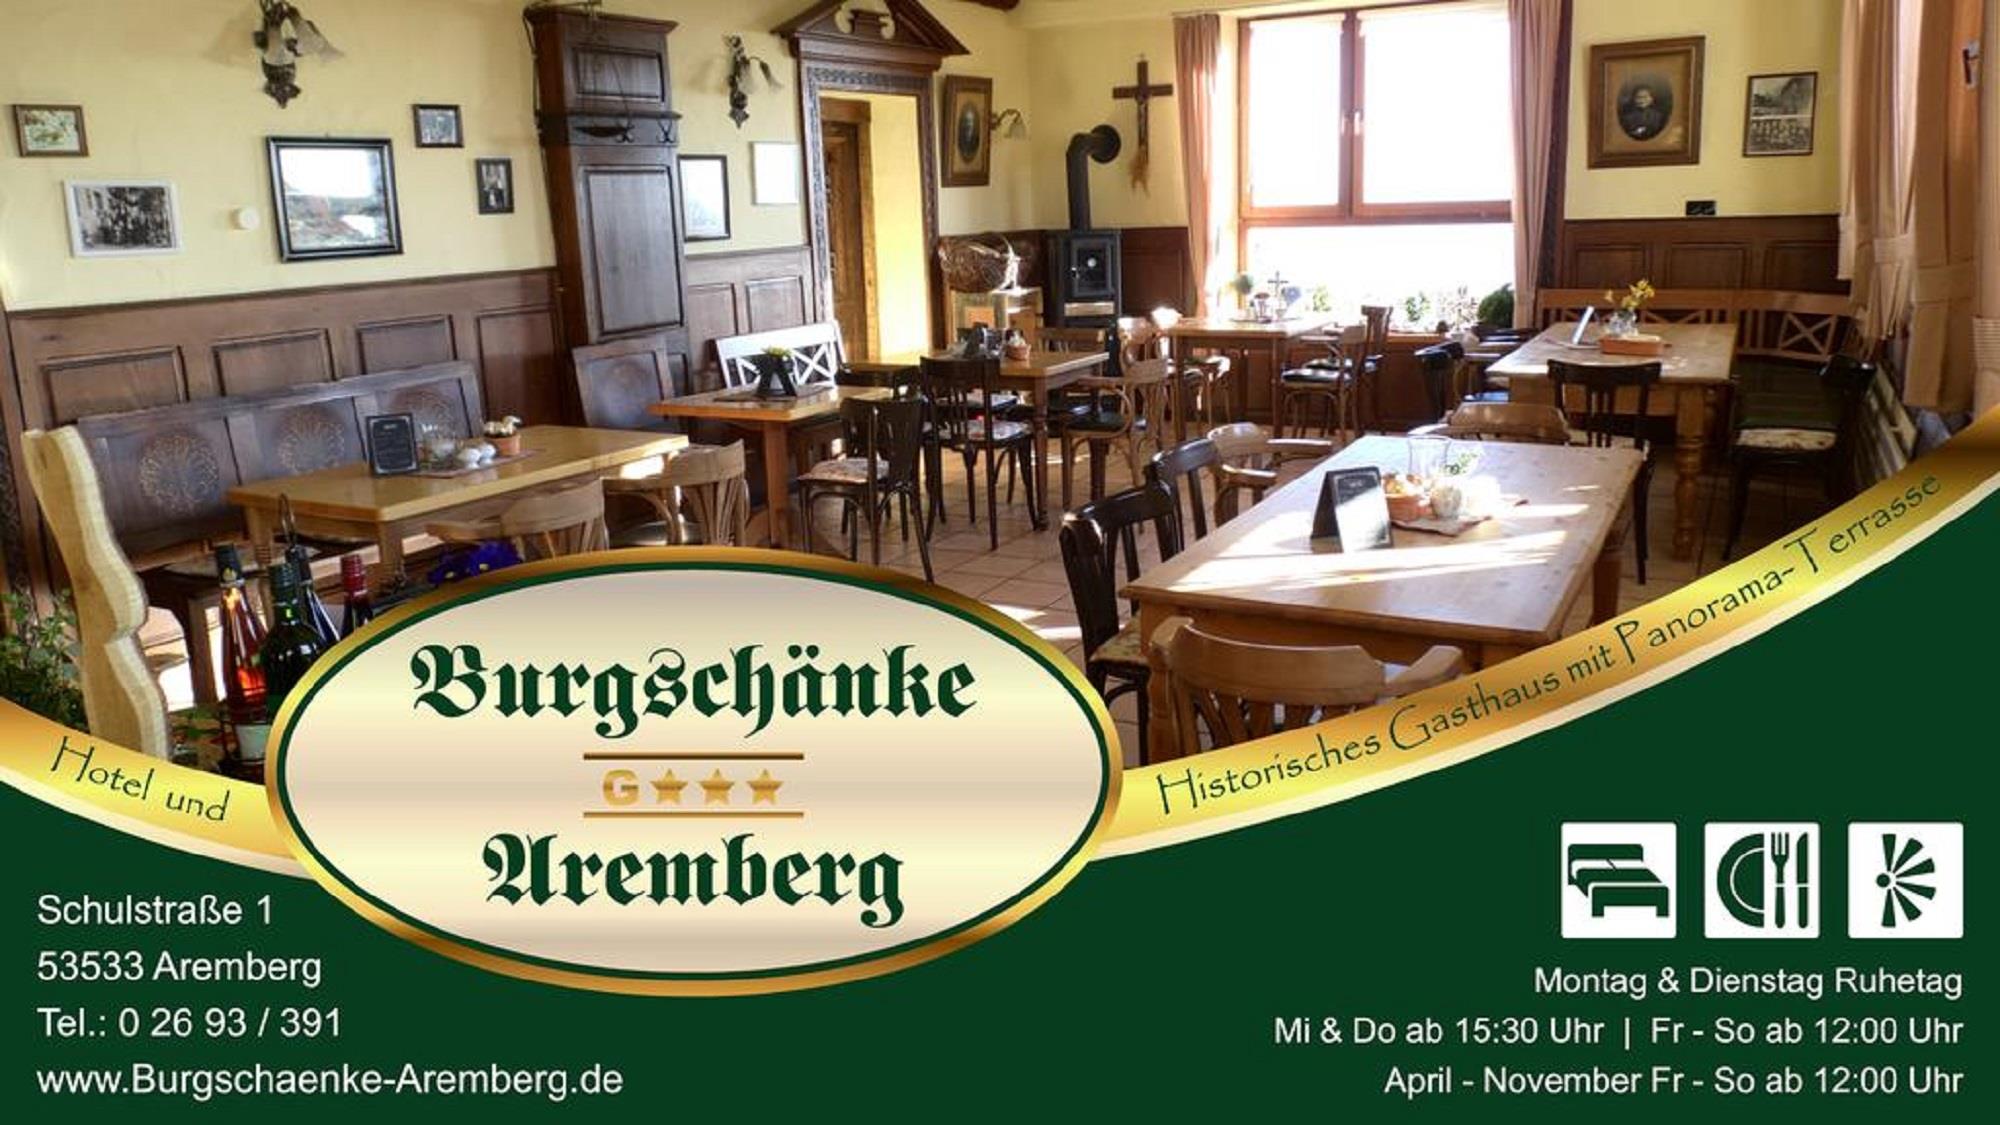 @ Burgschänke Aremberg / Boes